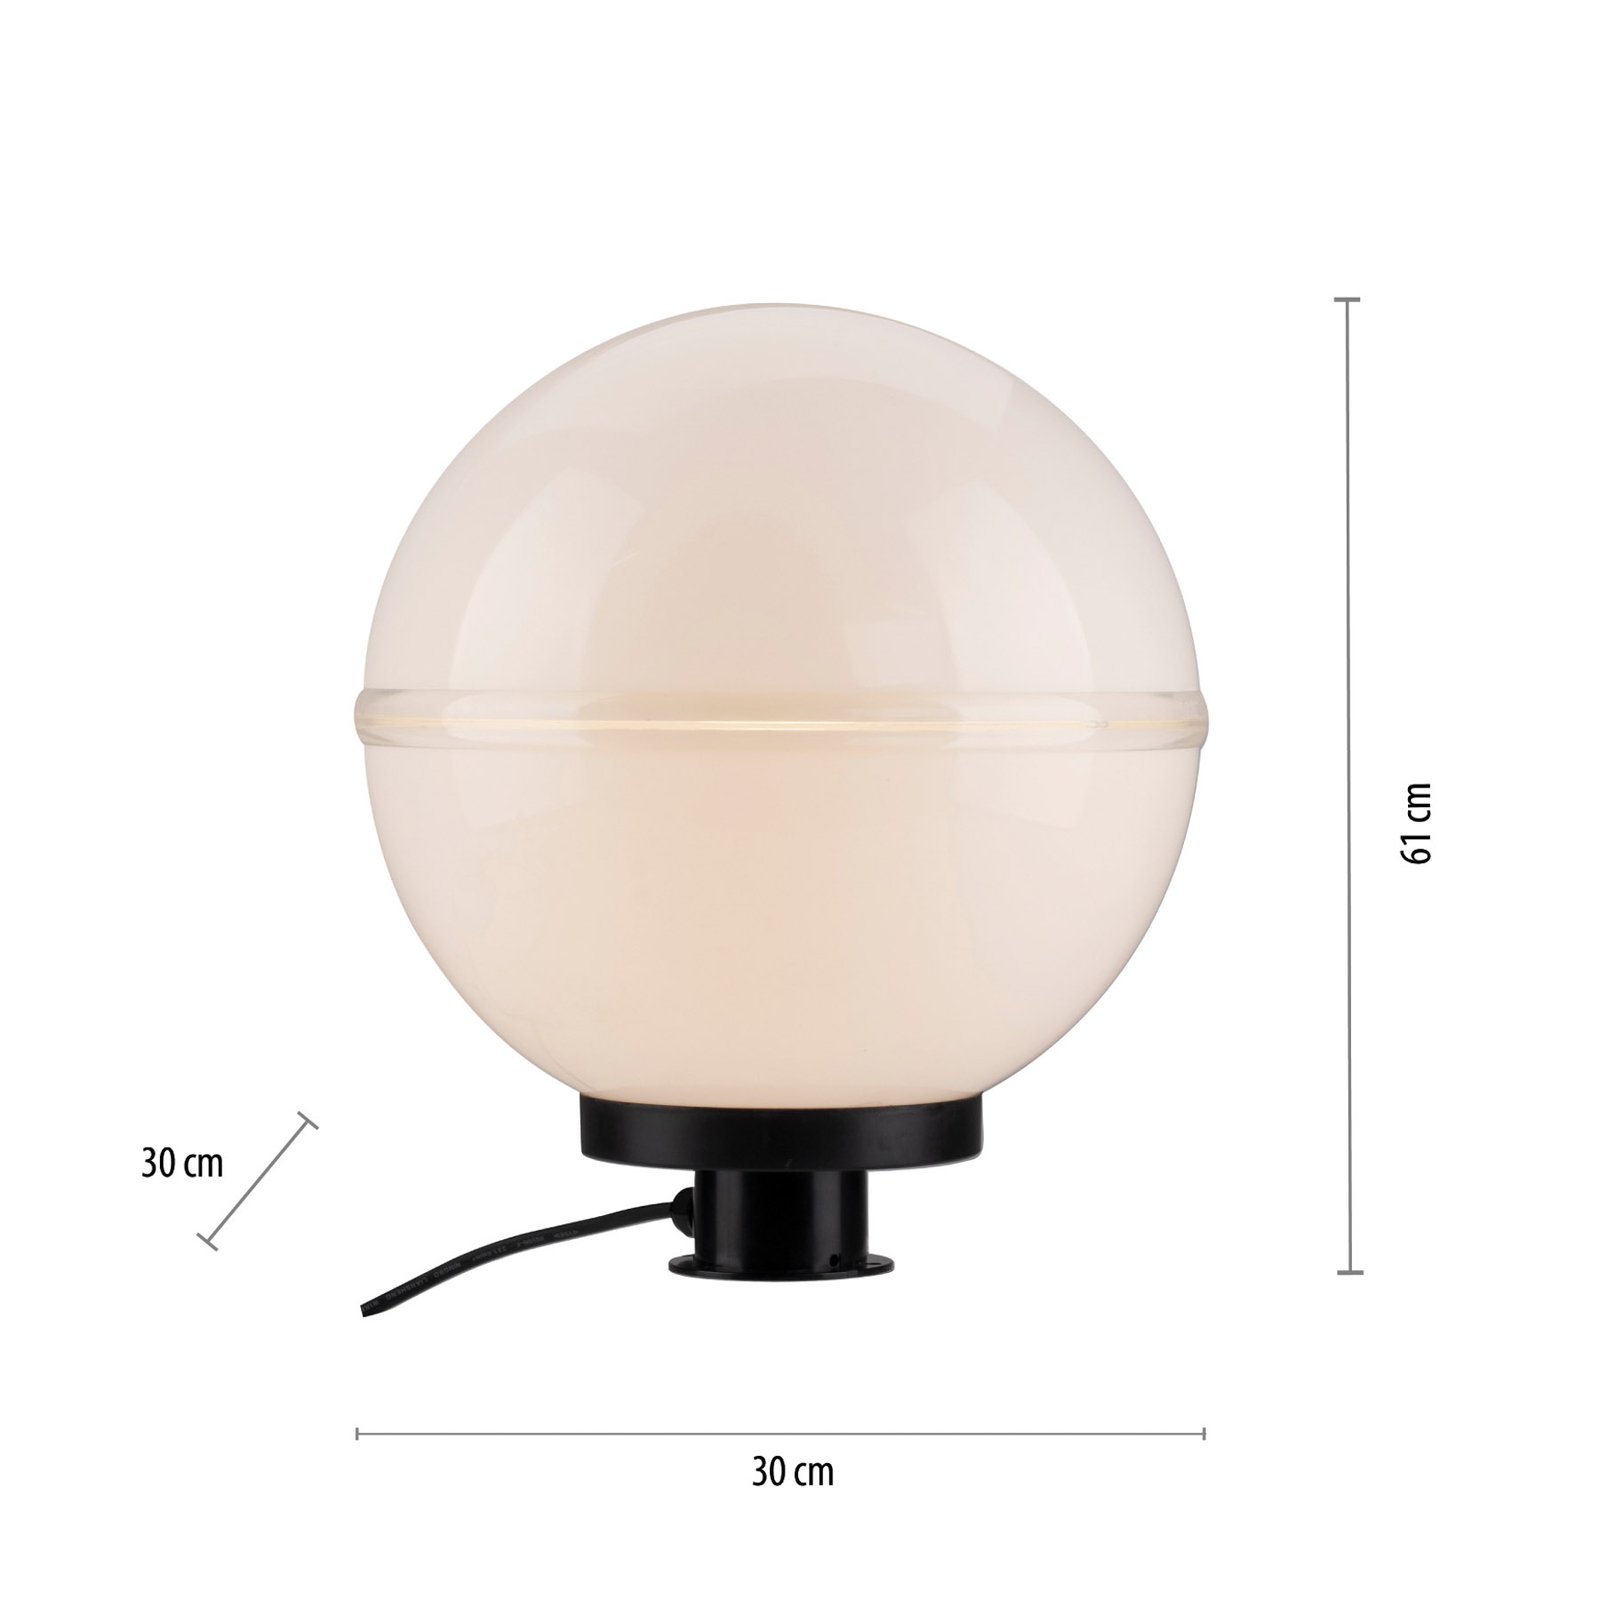 Hemi sfeerlamp met grondspies, Ø 30 cm